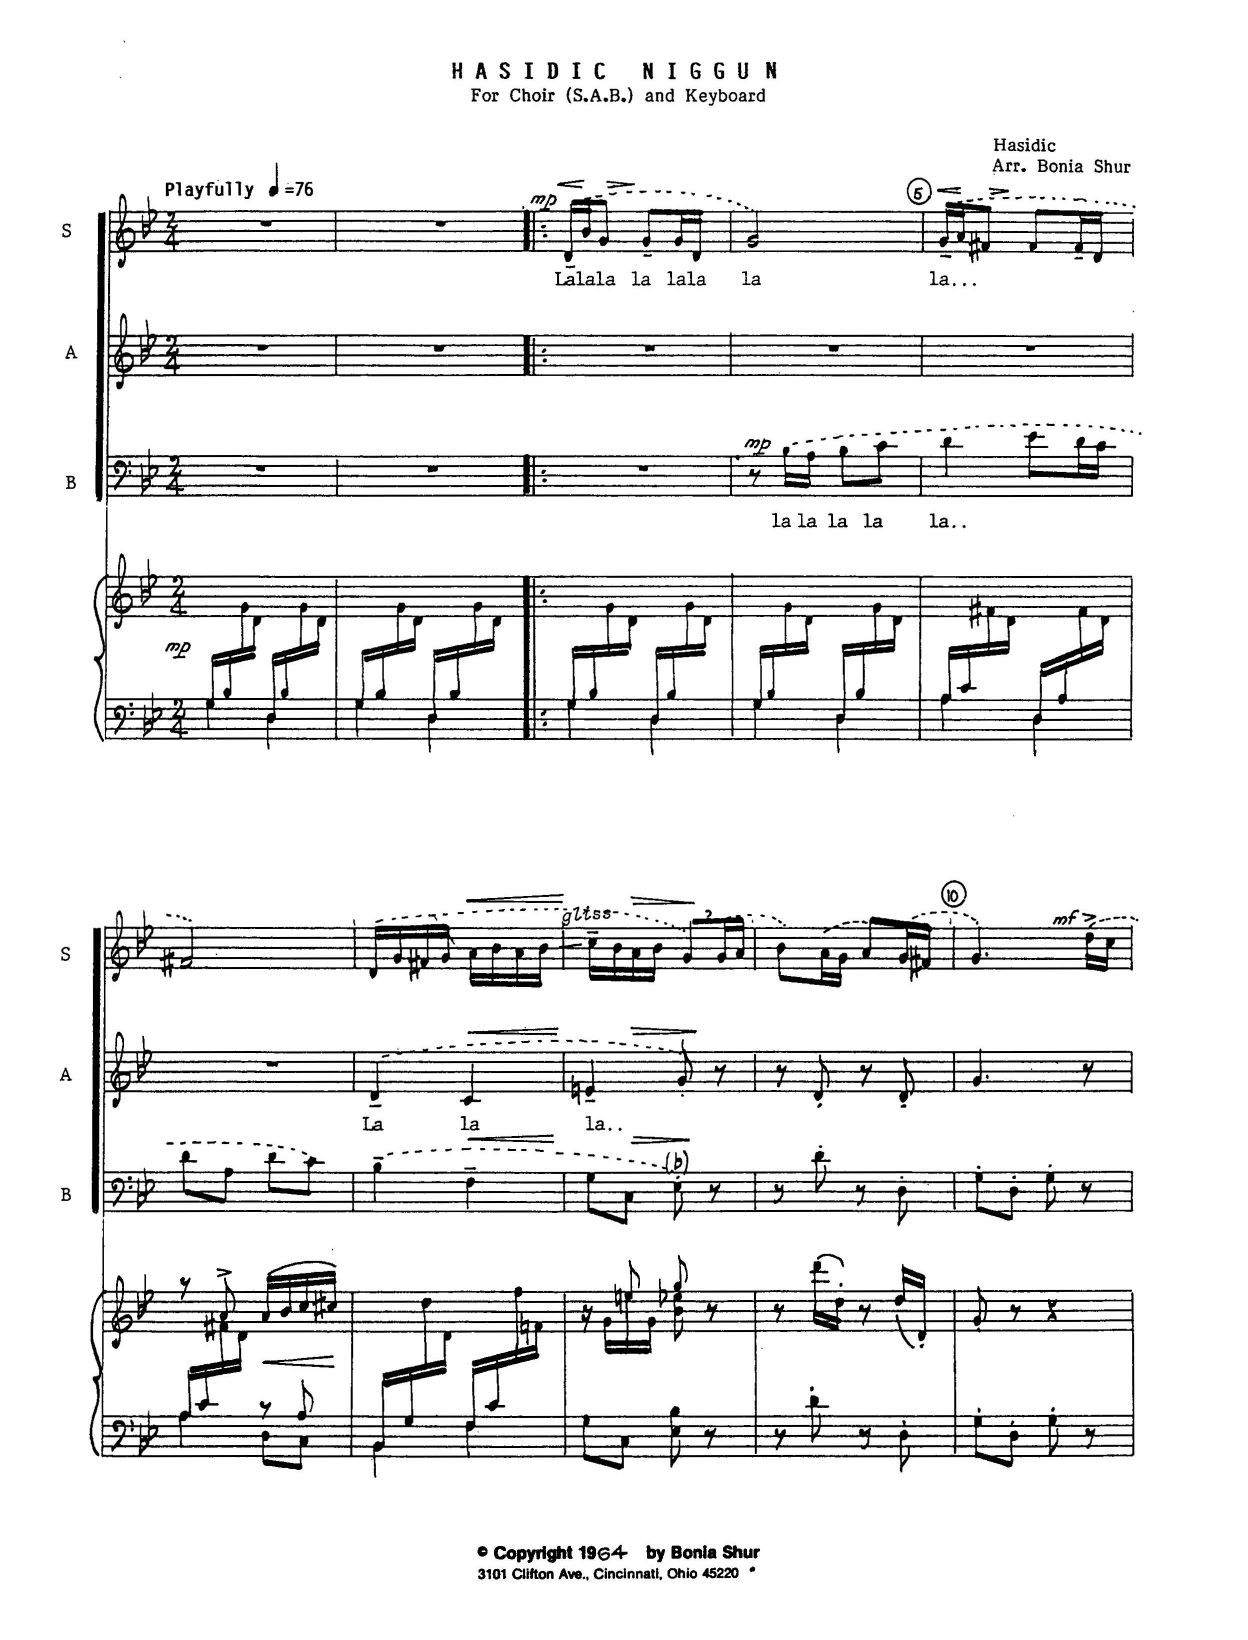 Download Bonia Shur Hasidic Niggun Sheet Music and learn how to play SAB Choir PDF digital score in minutes